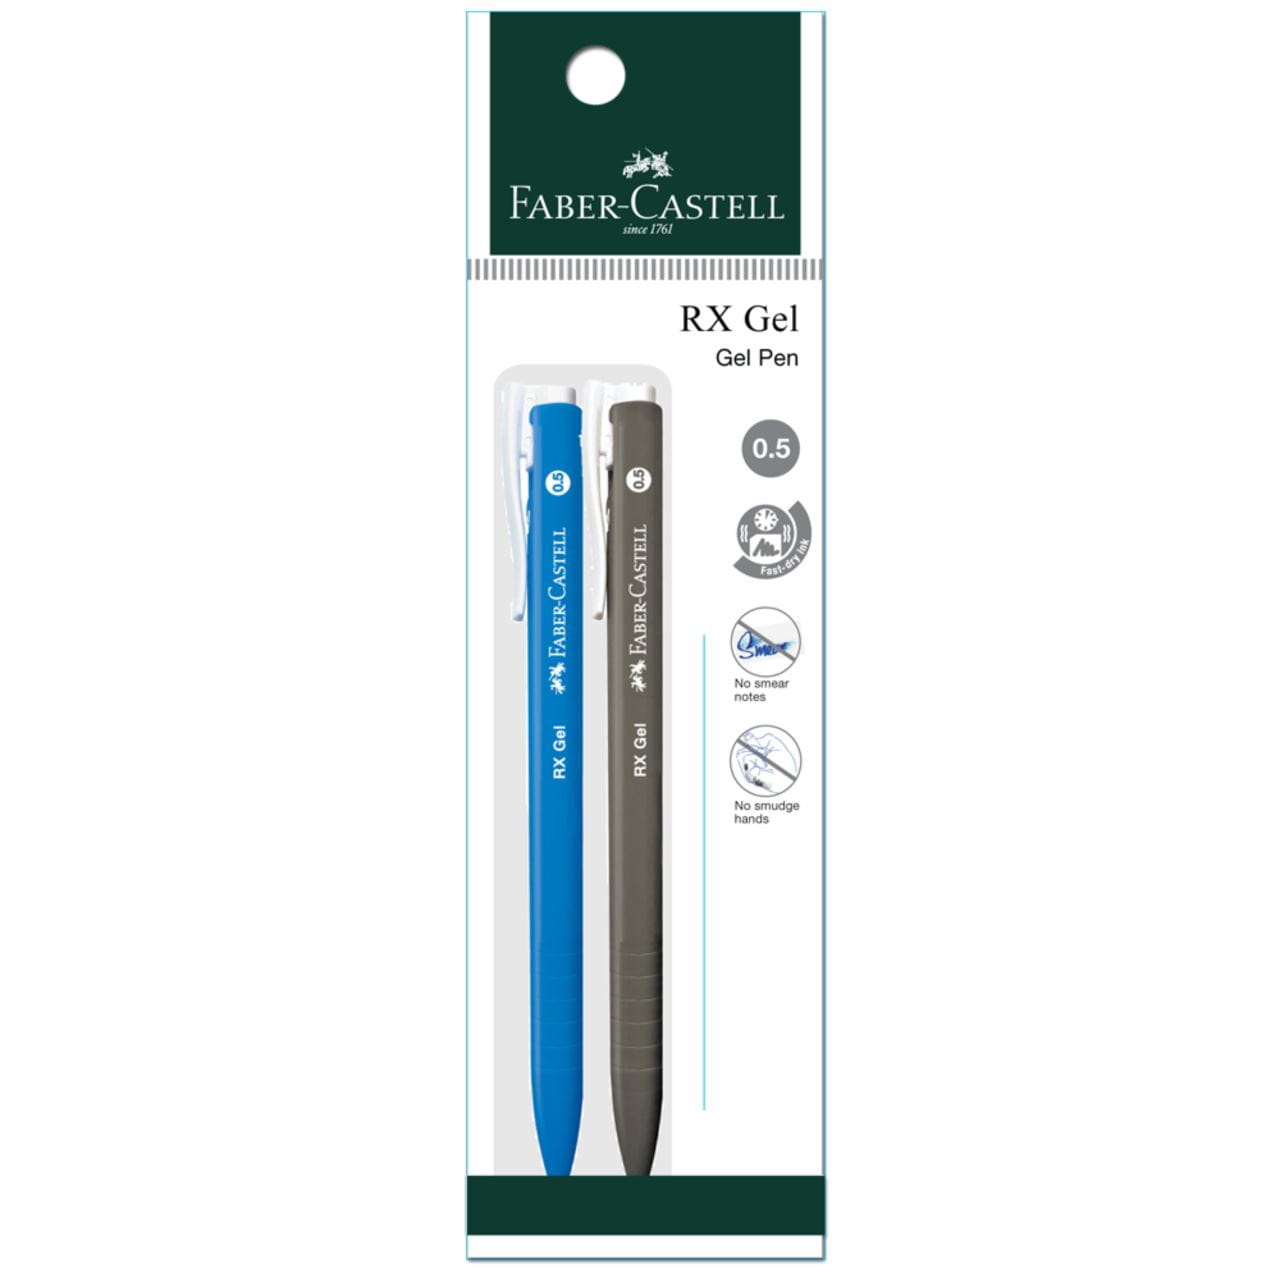 Faber-Castell - Gel pen RX Gel, 0.5mm, blistercard of 2